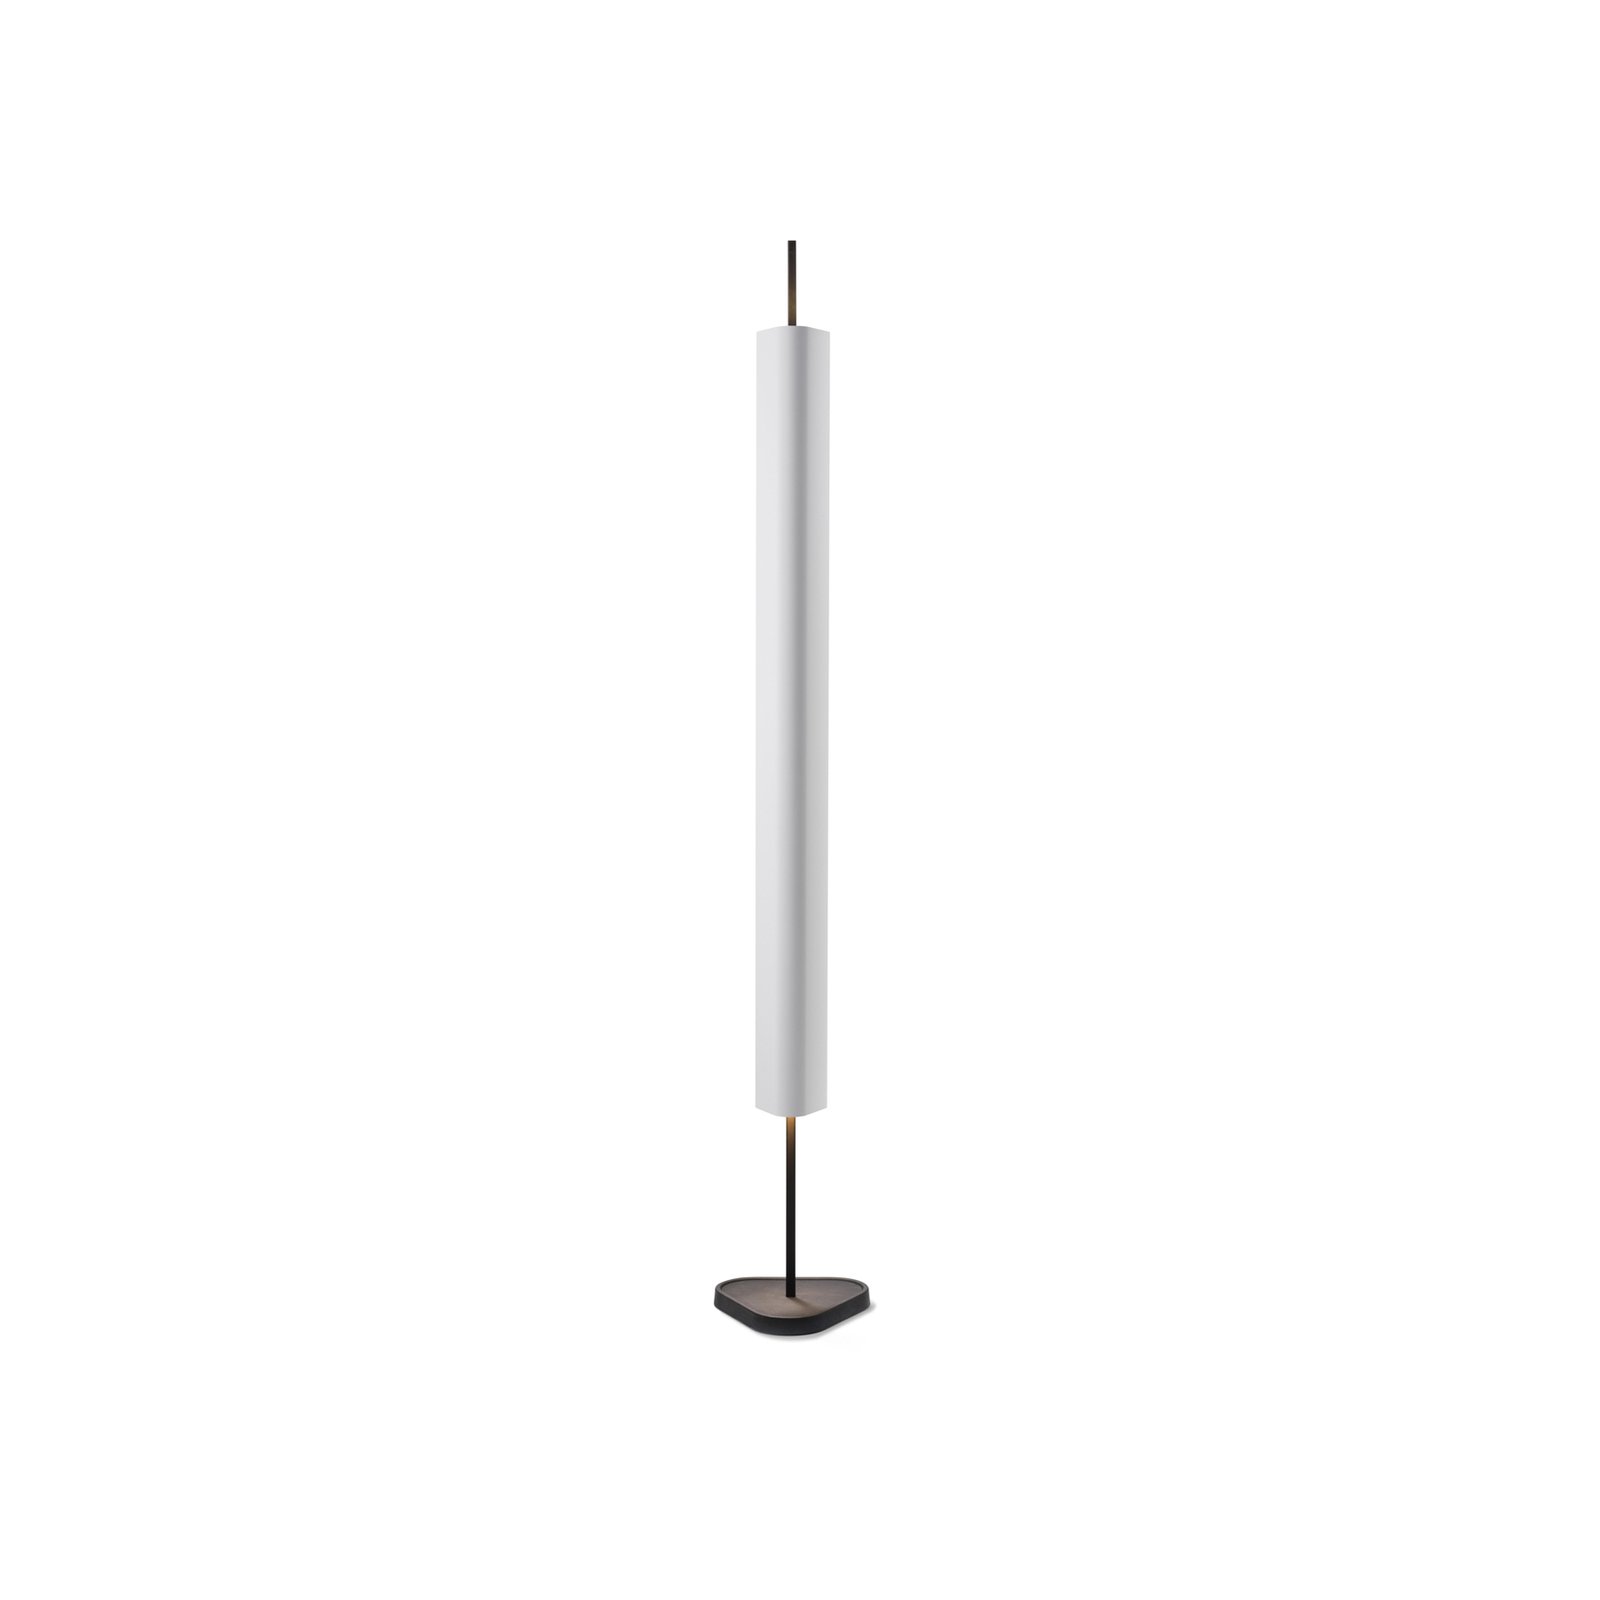 FLOS LED floor lamp Emi, white, dimmable, height 170 cm